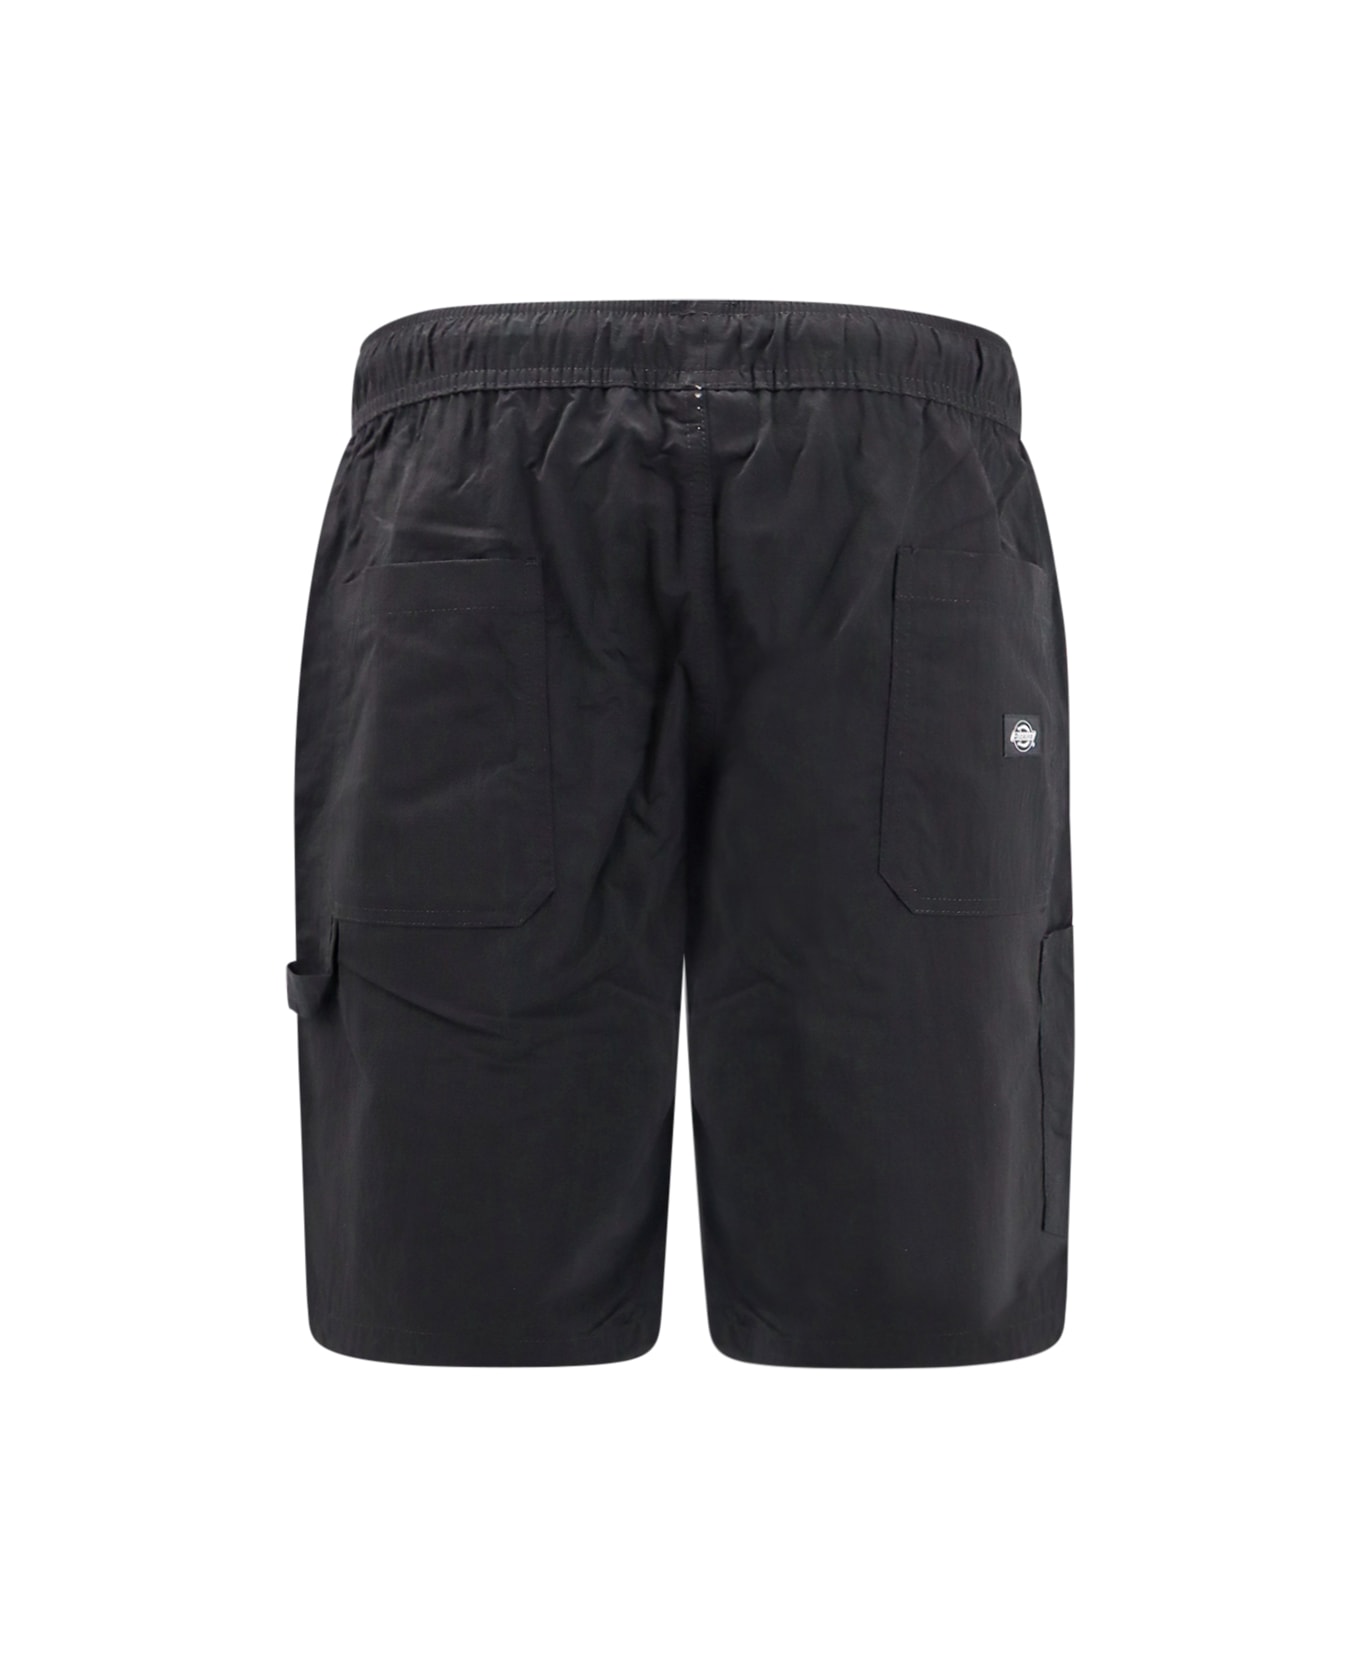 Dickies Bermuda Shorts - Black